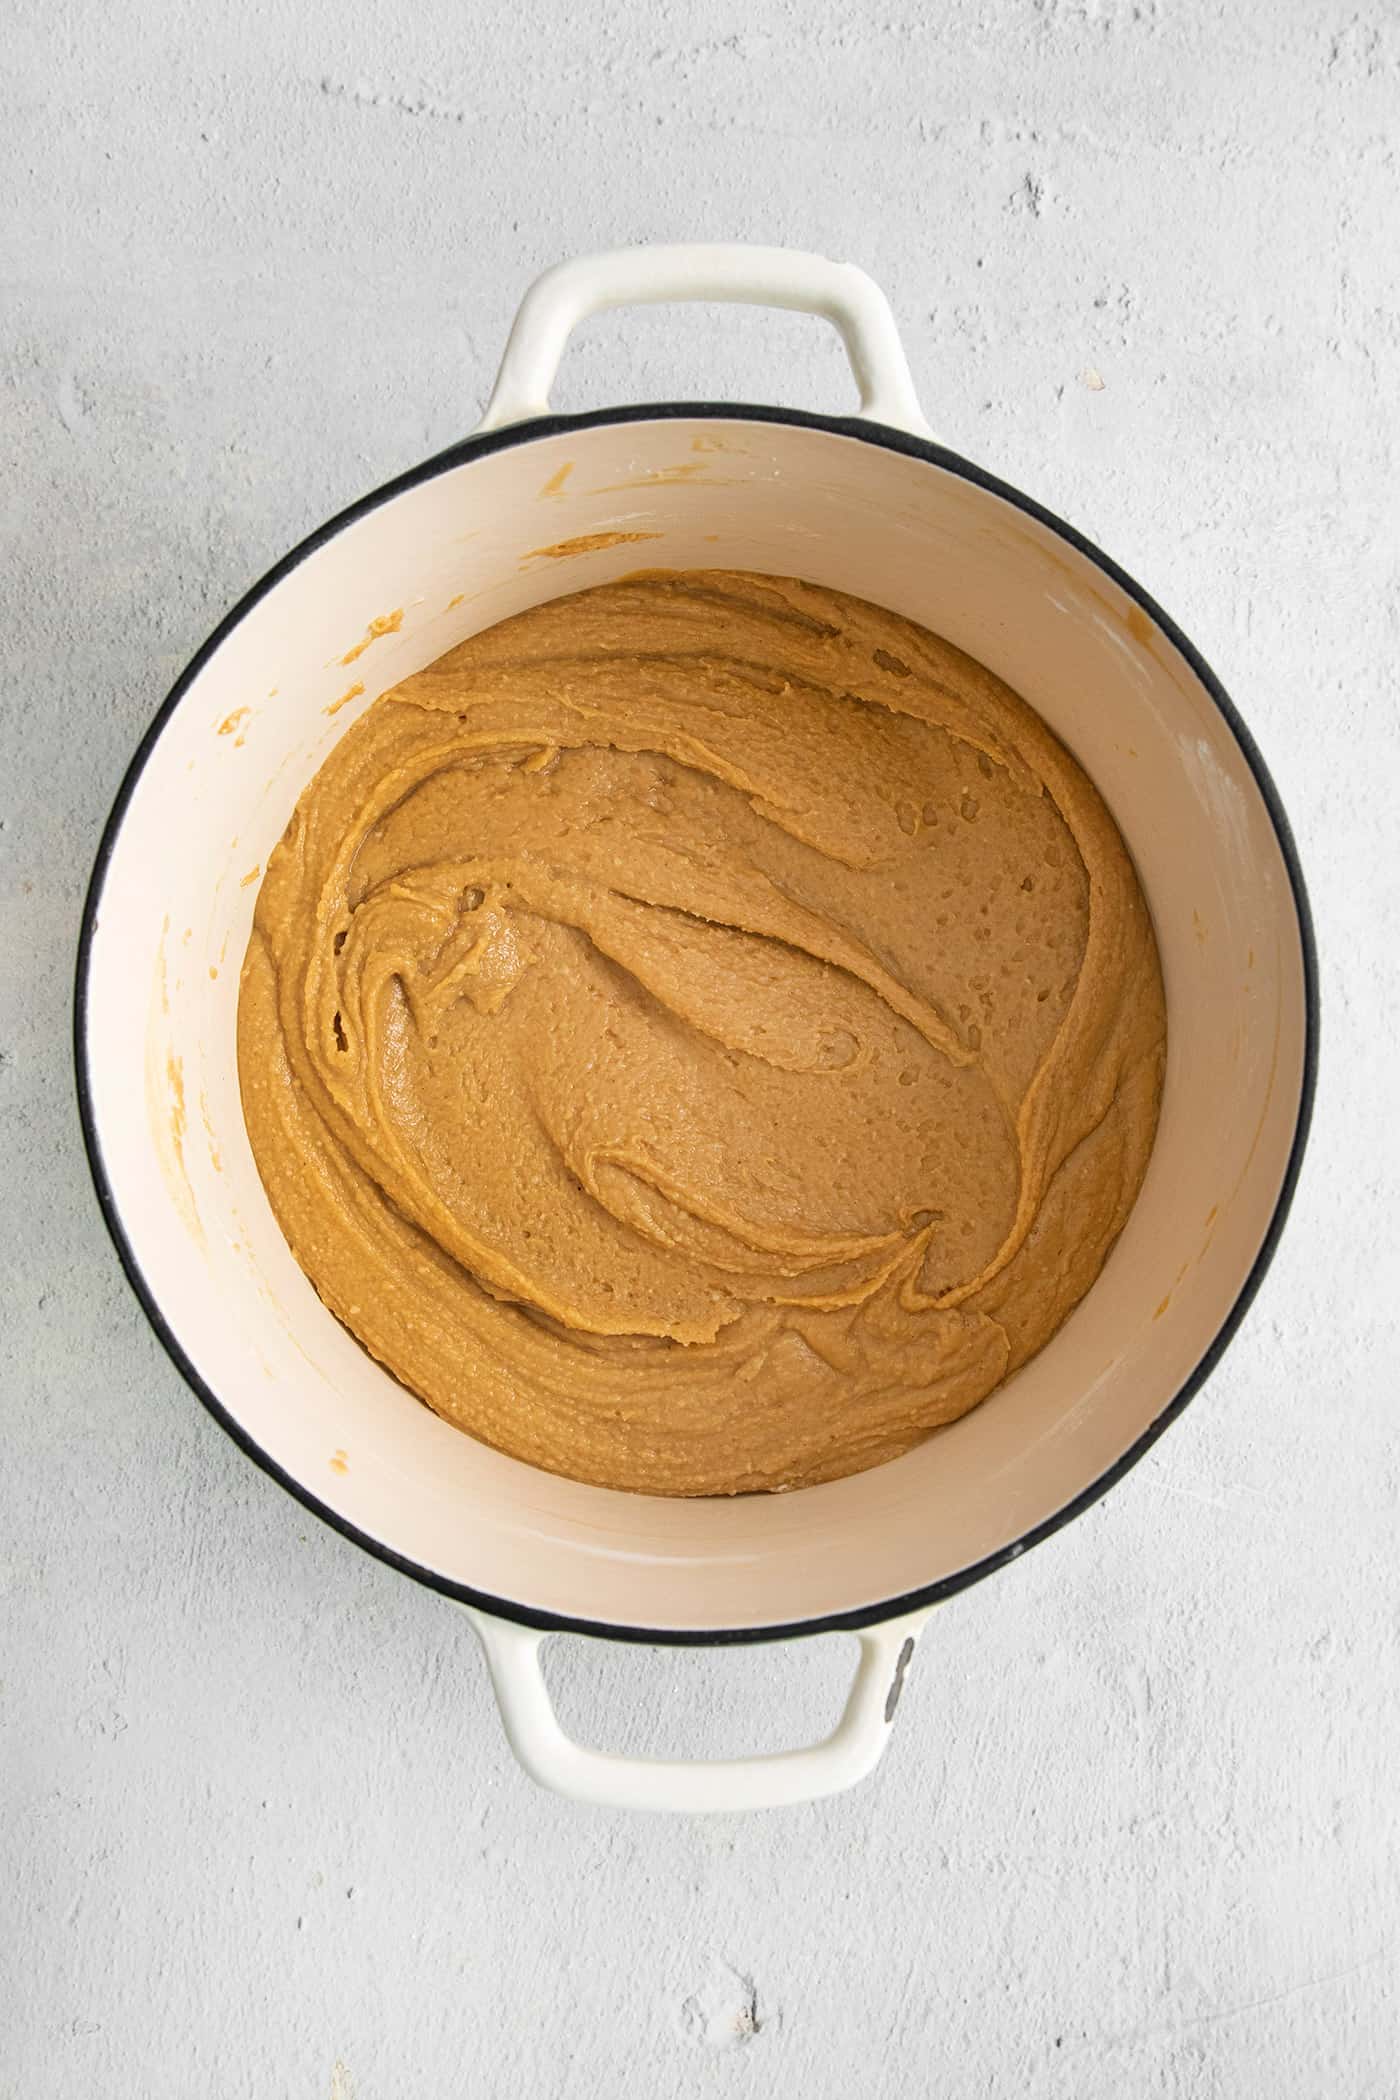 Peanut butter fudge mixture in a saucepan